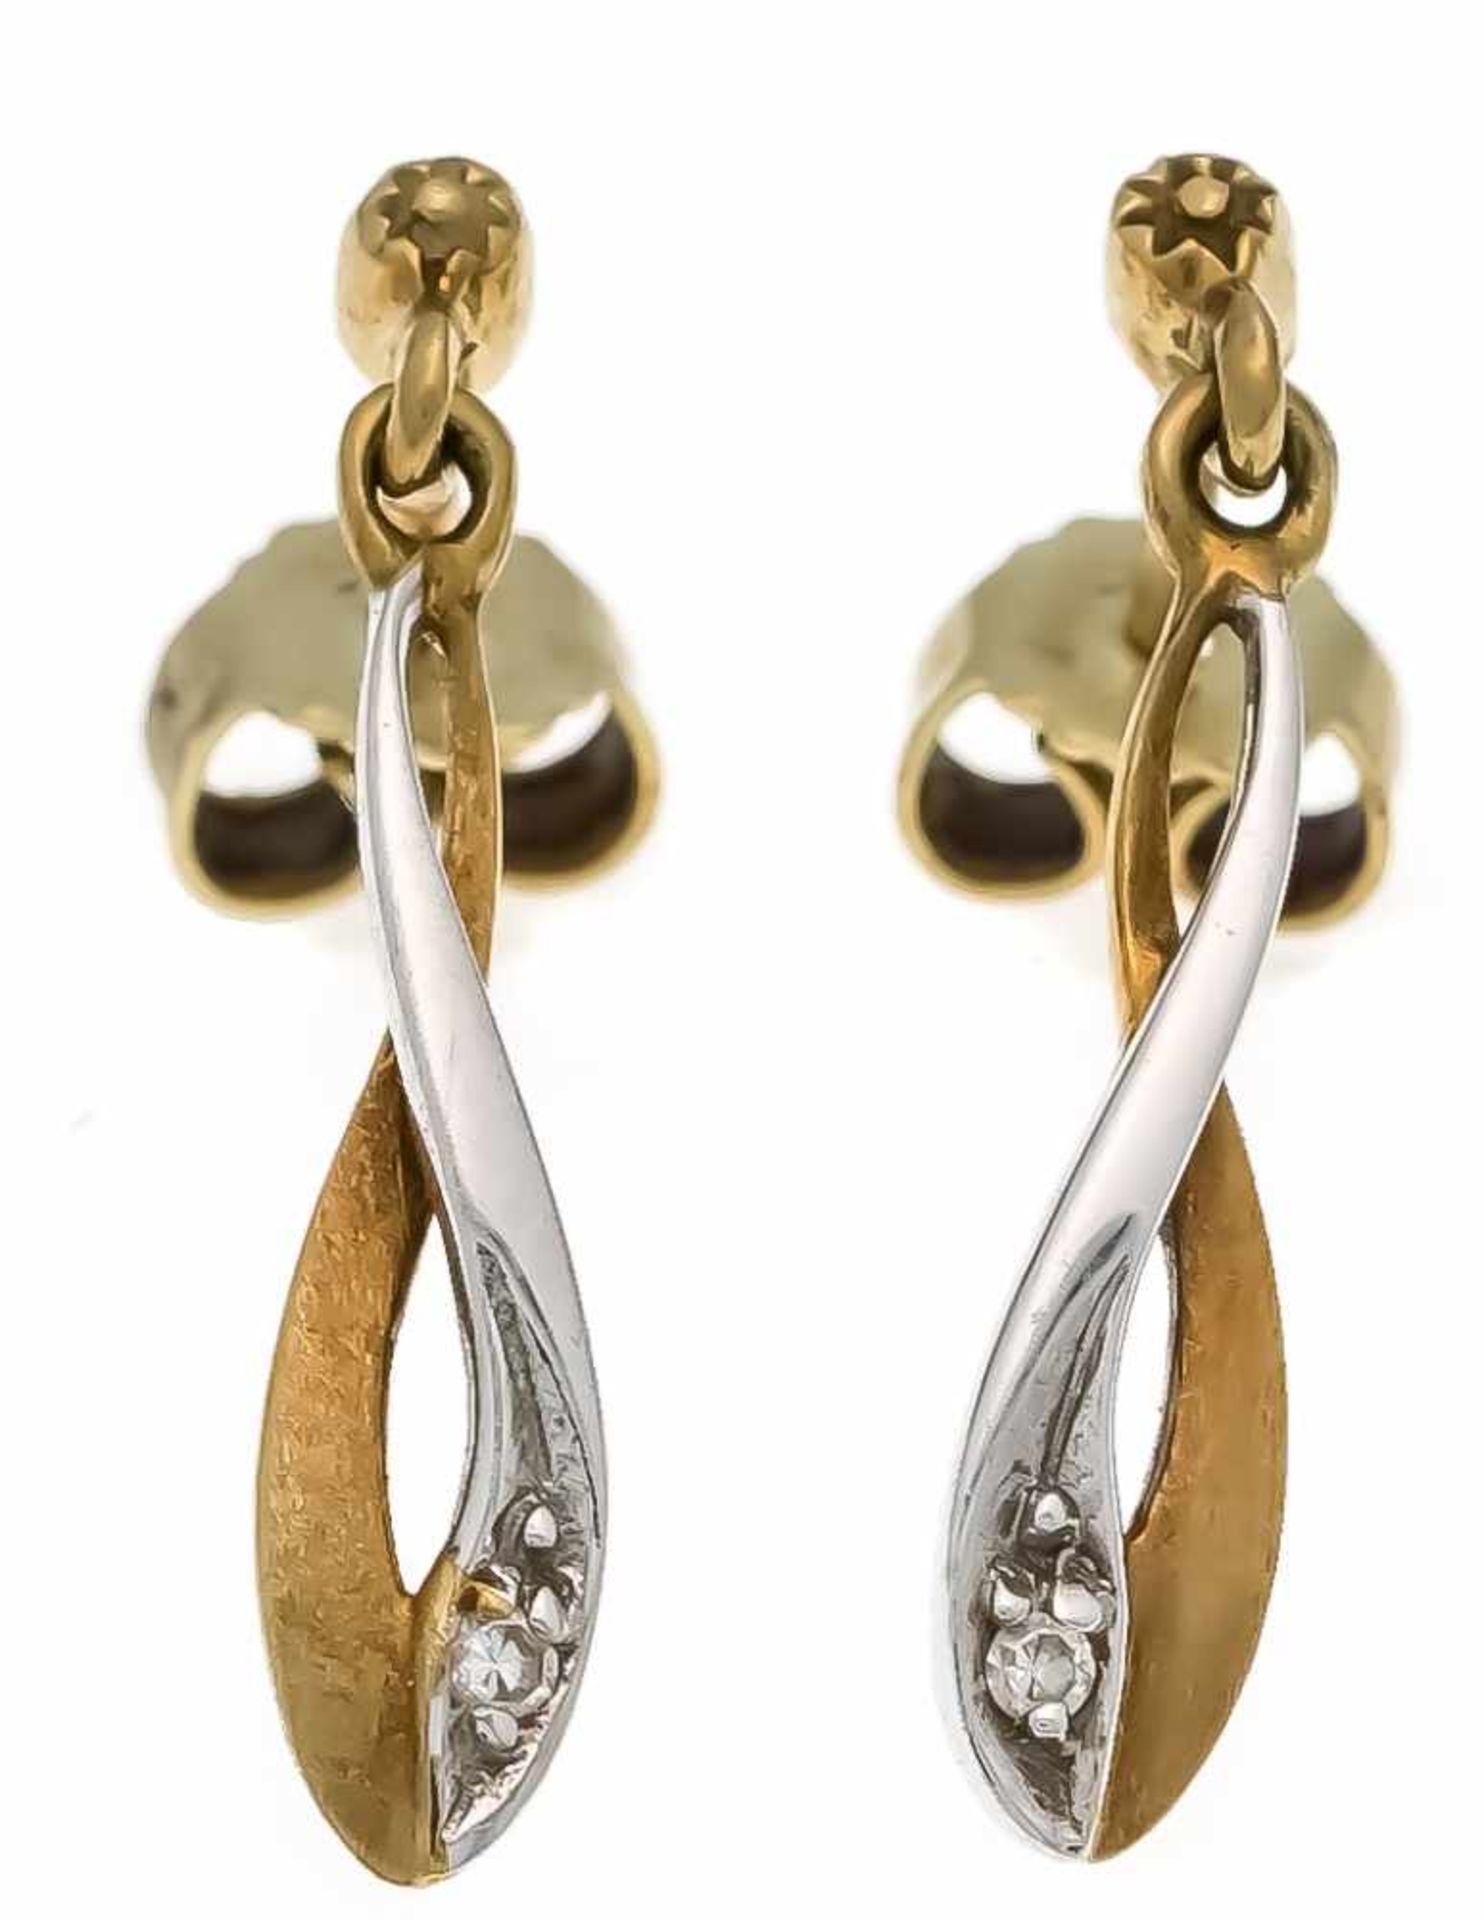 Diamant-Ohrstecker GG/WG 585/000 mit je einem Diamanten, L. 18 mm, 2,1 gDiamond stud earrings GG /